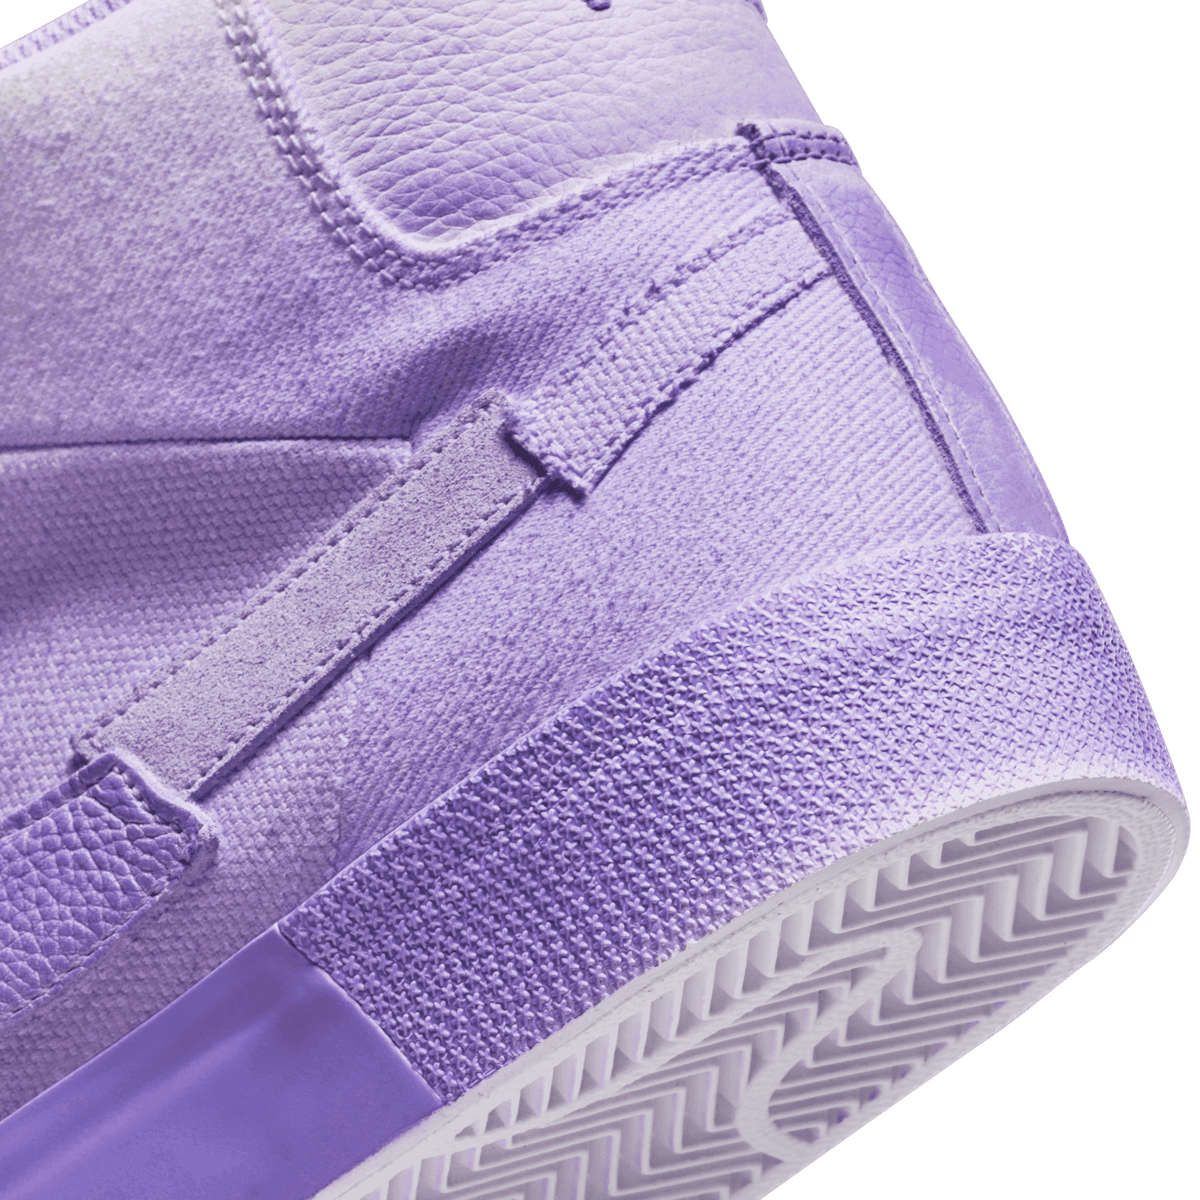 Nike SB Blazer Mid PRM Lilac Angle 5